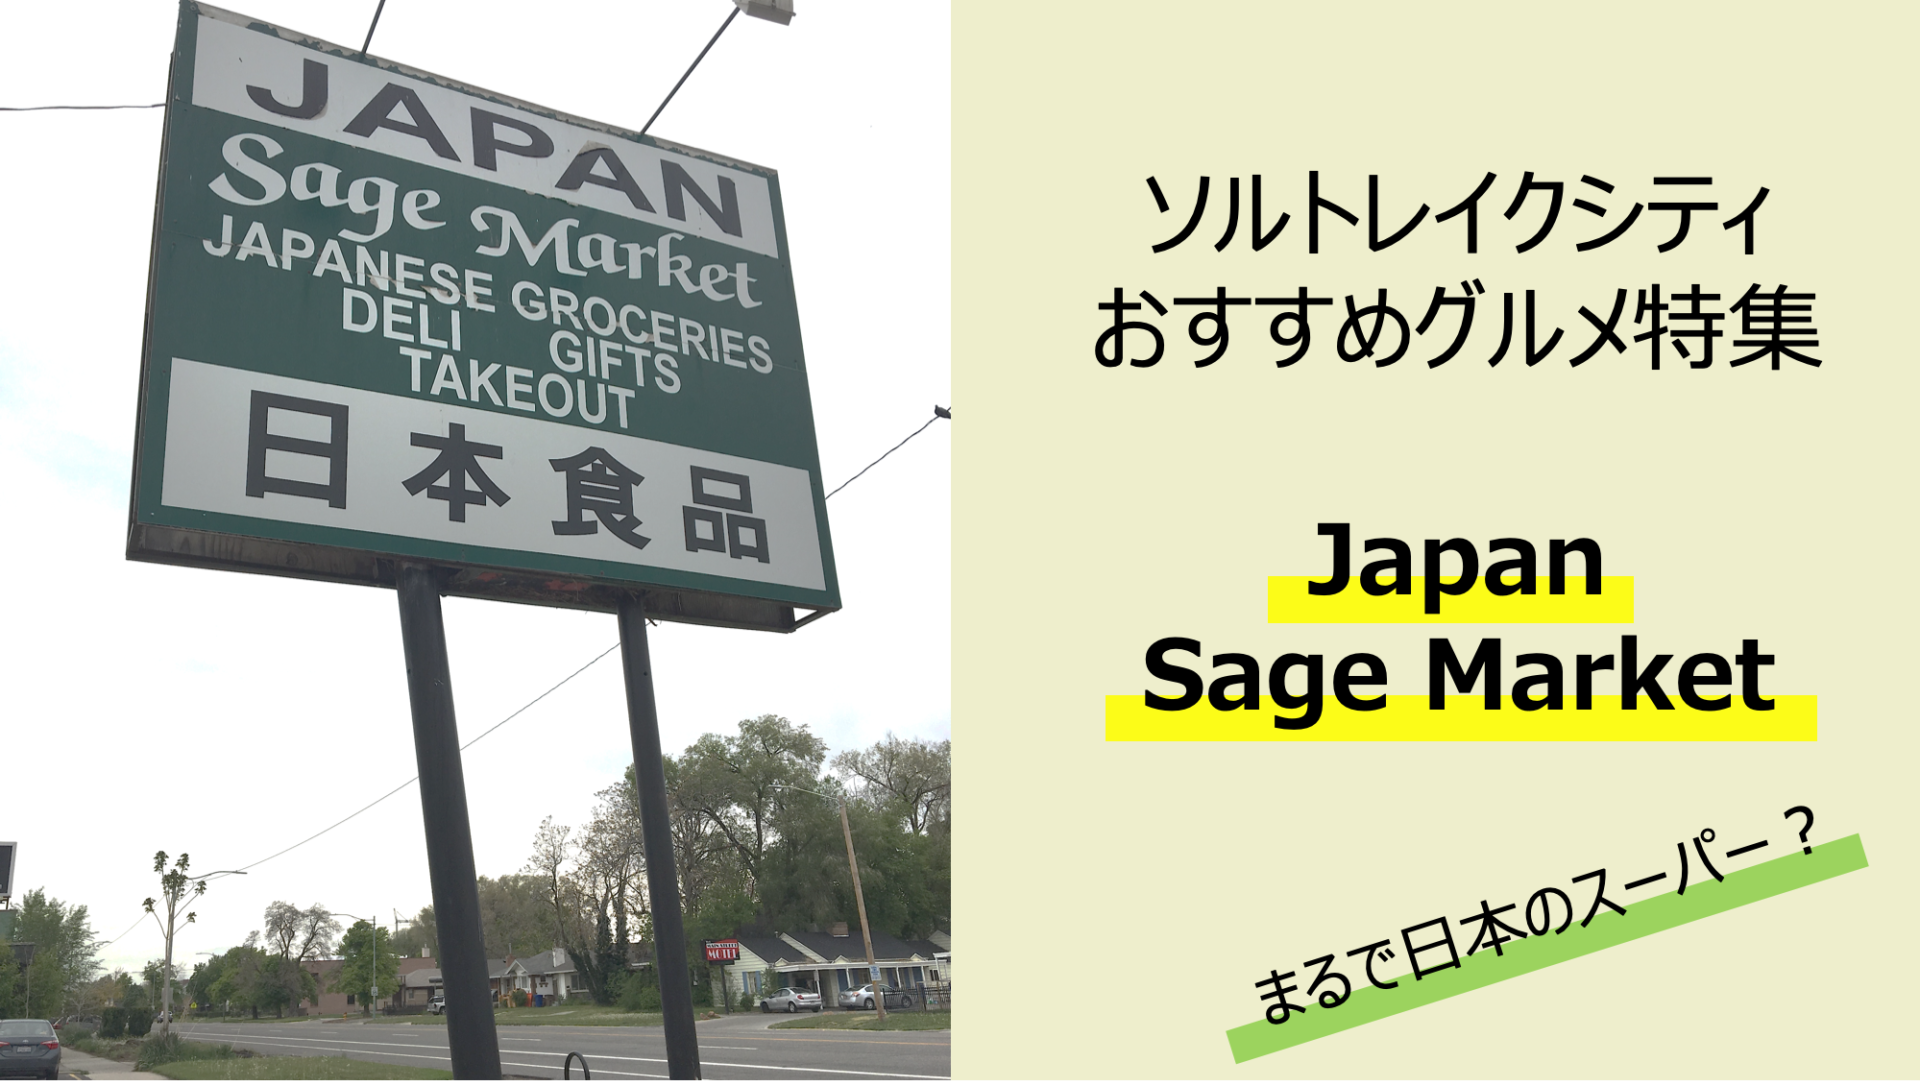 Japan sage market